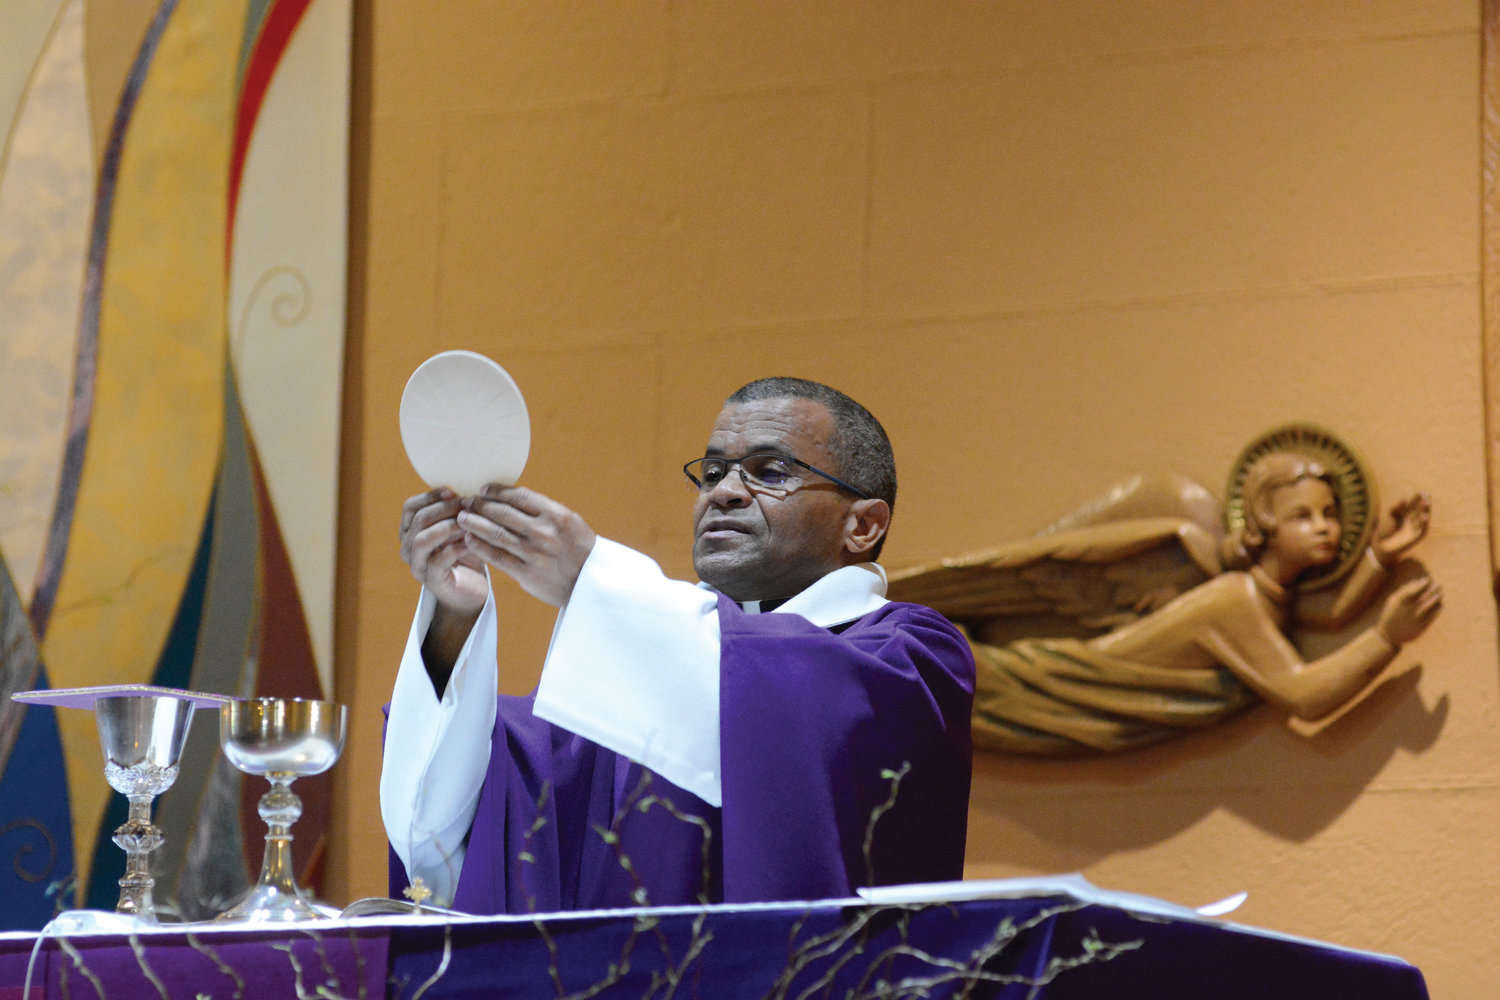 Father Ricardo Fajardo, pastor since 2010, elevates the Eucharist.